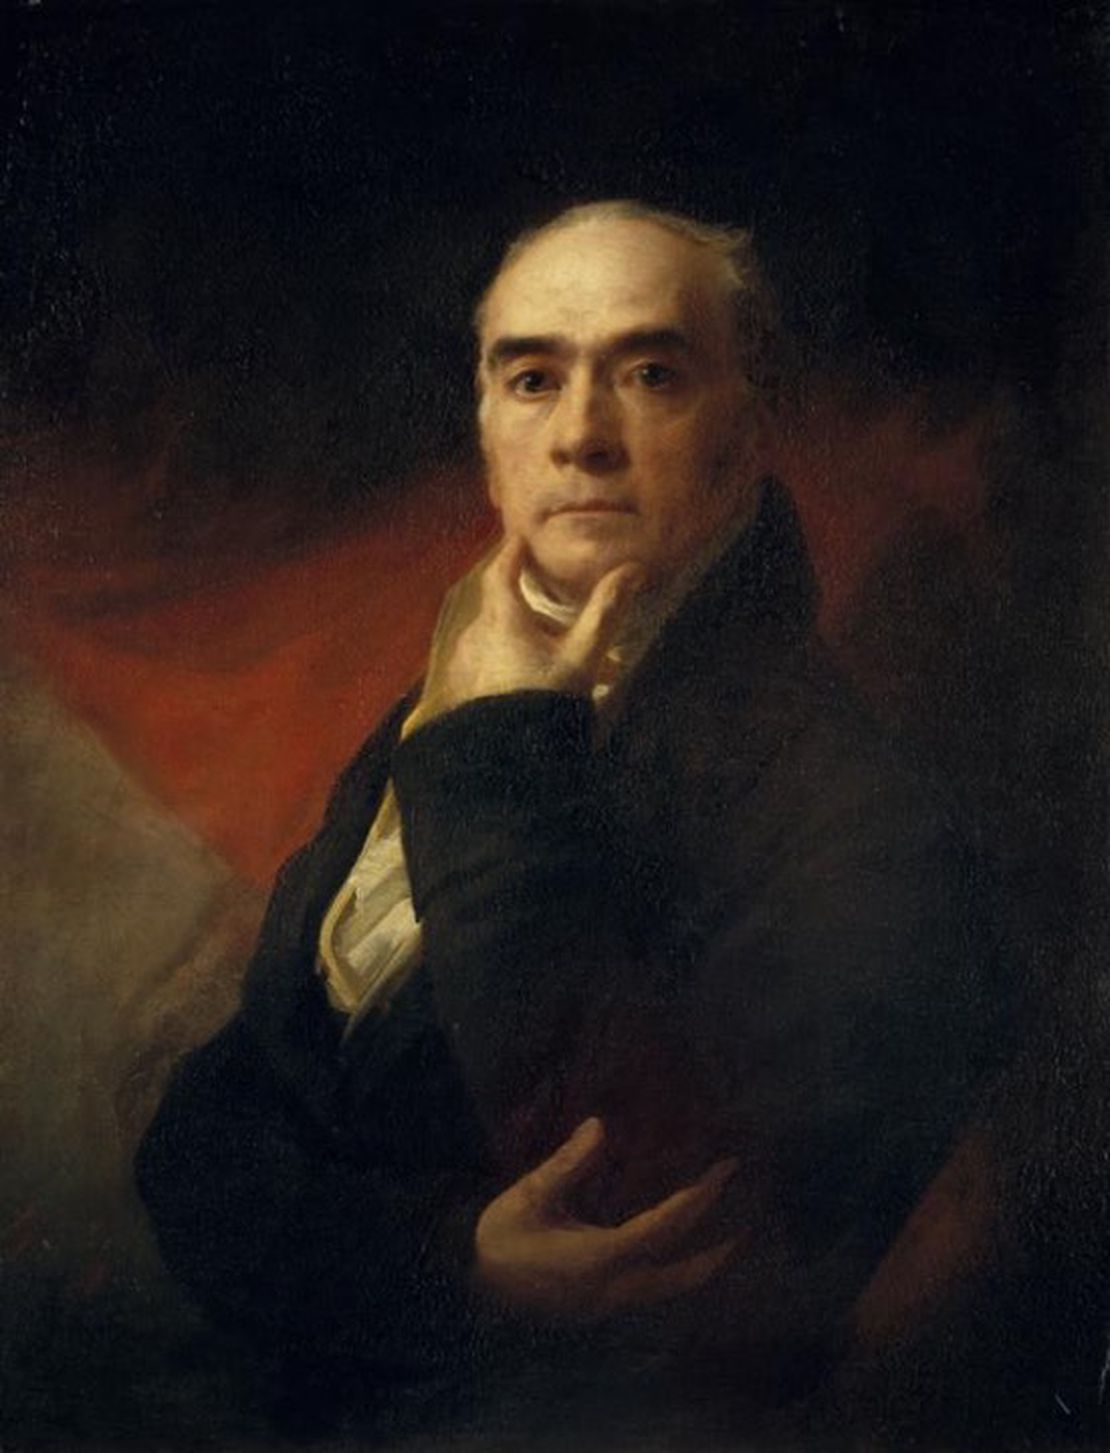 Sir Henry Raeburn, renowned Scottish painter, born.